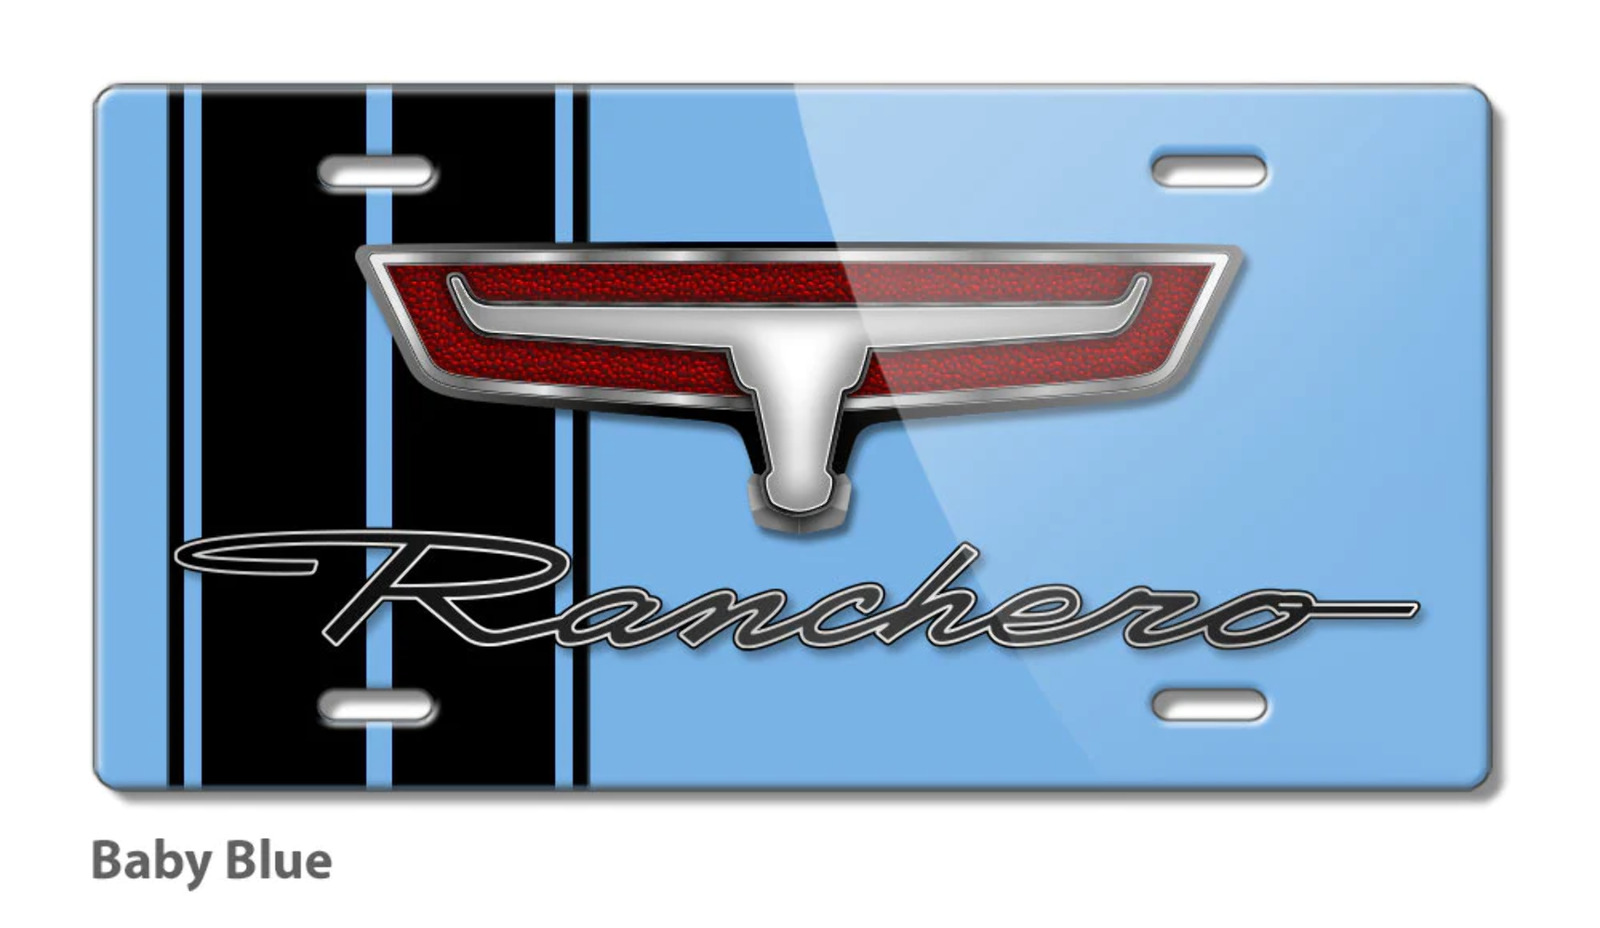 1966 - 1967 Ford Ranchero Emblem Novelty License Plate  - Aluminum - 16 colors -